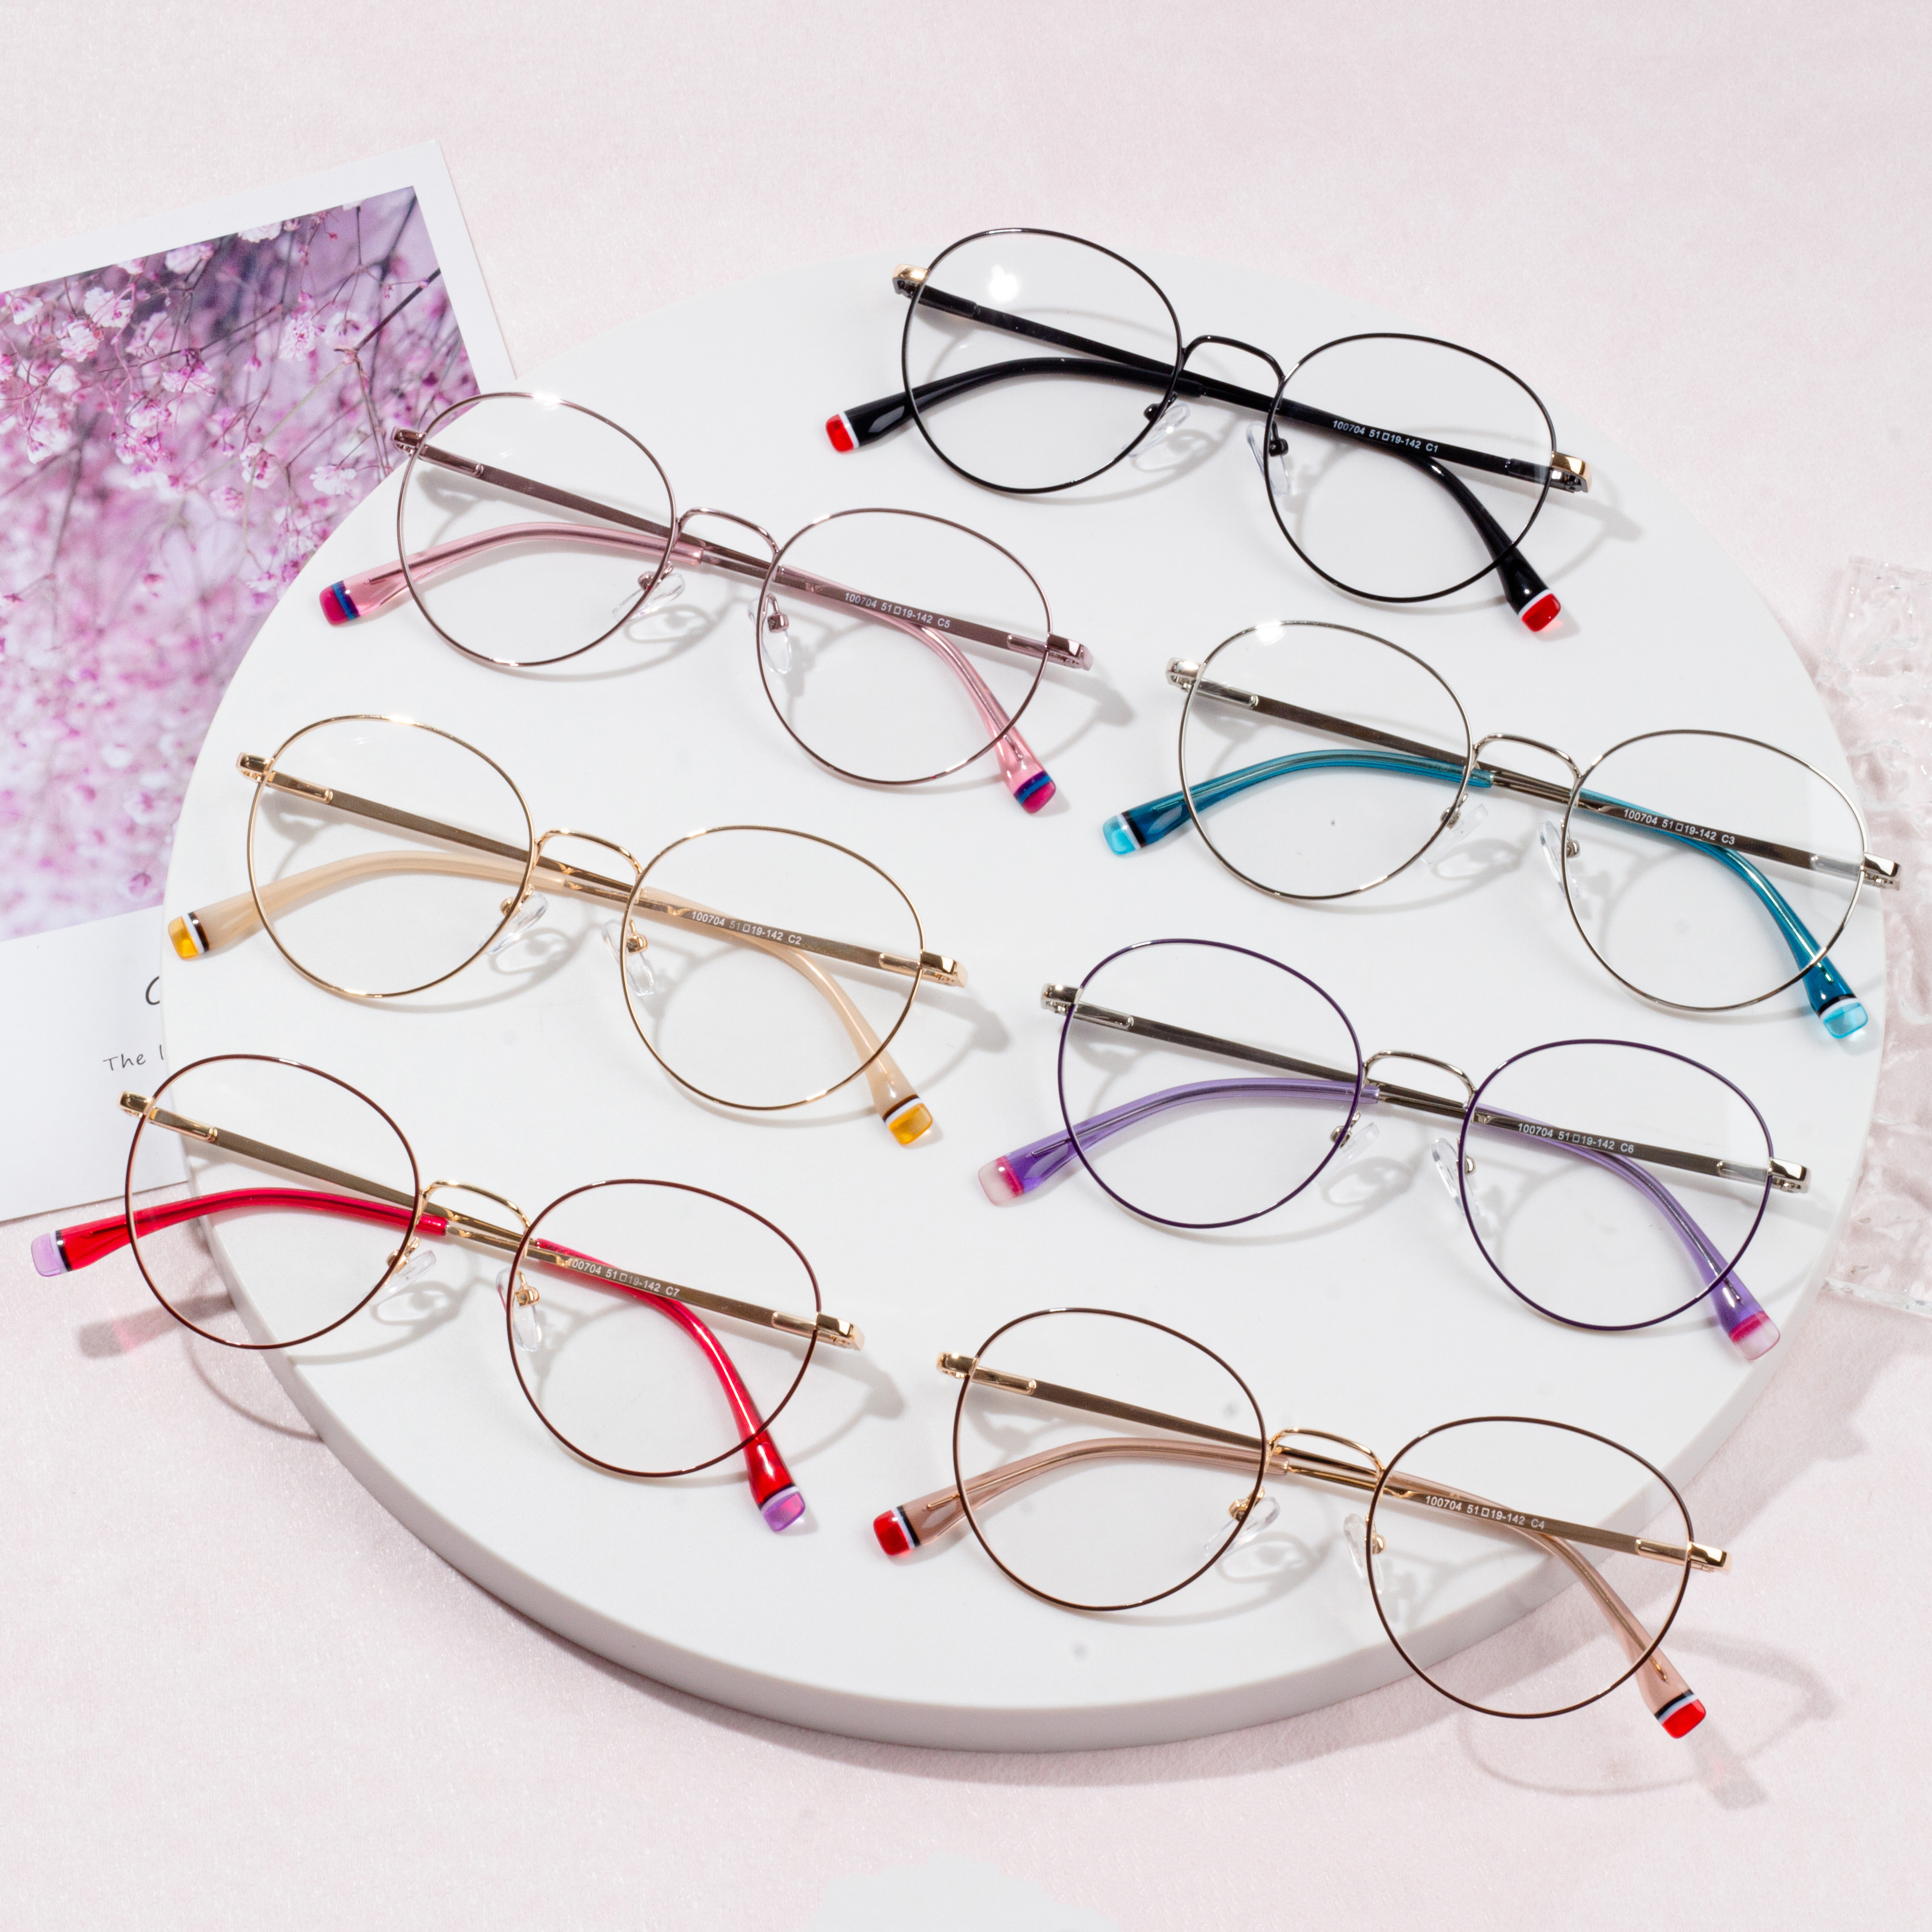 Shitje fabrike syze te ndryshme